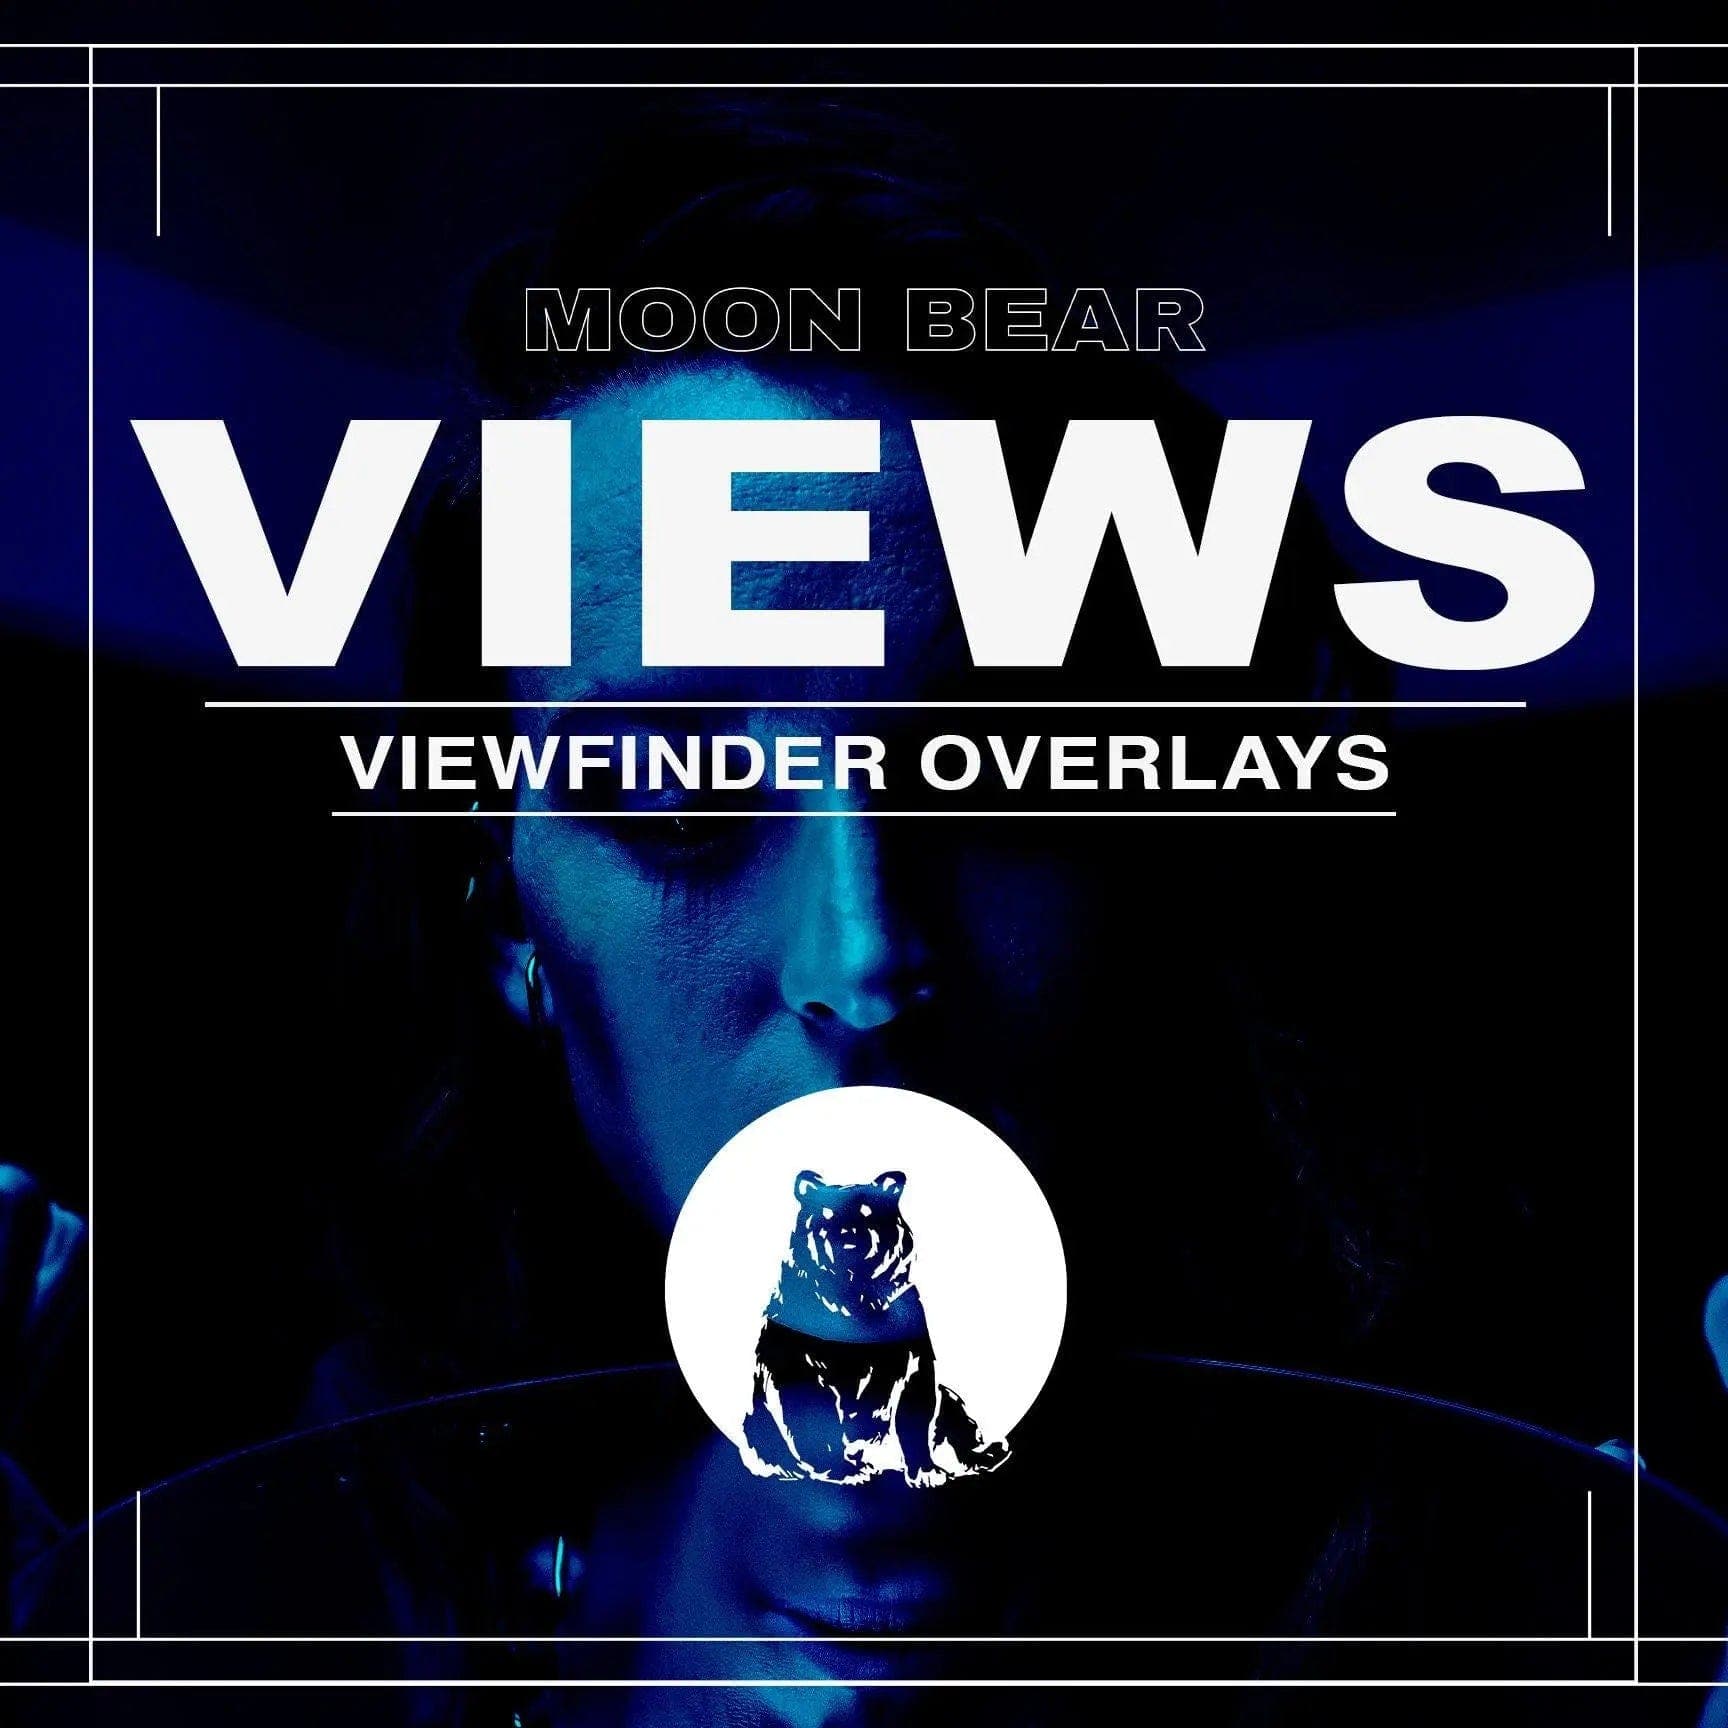 VIEWS - Viewfinder Overlays - moonbear.shop